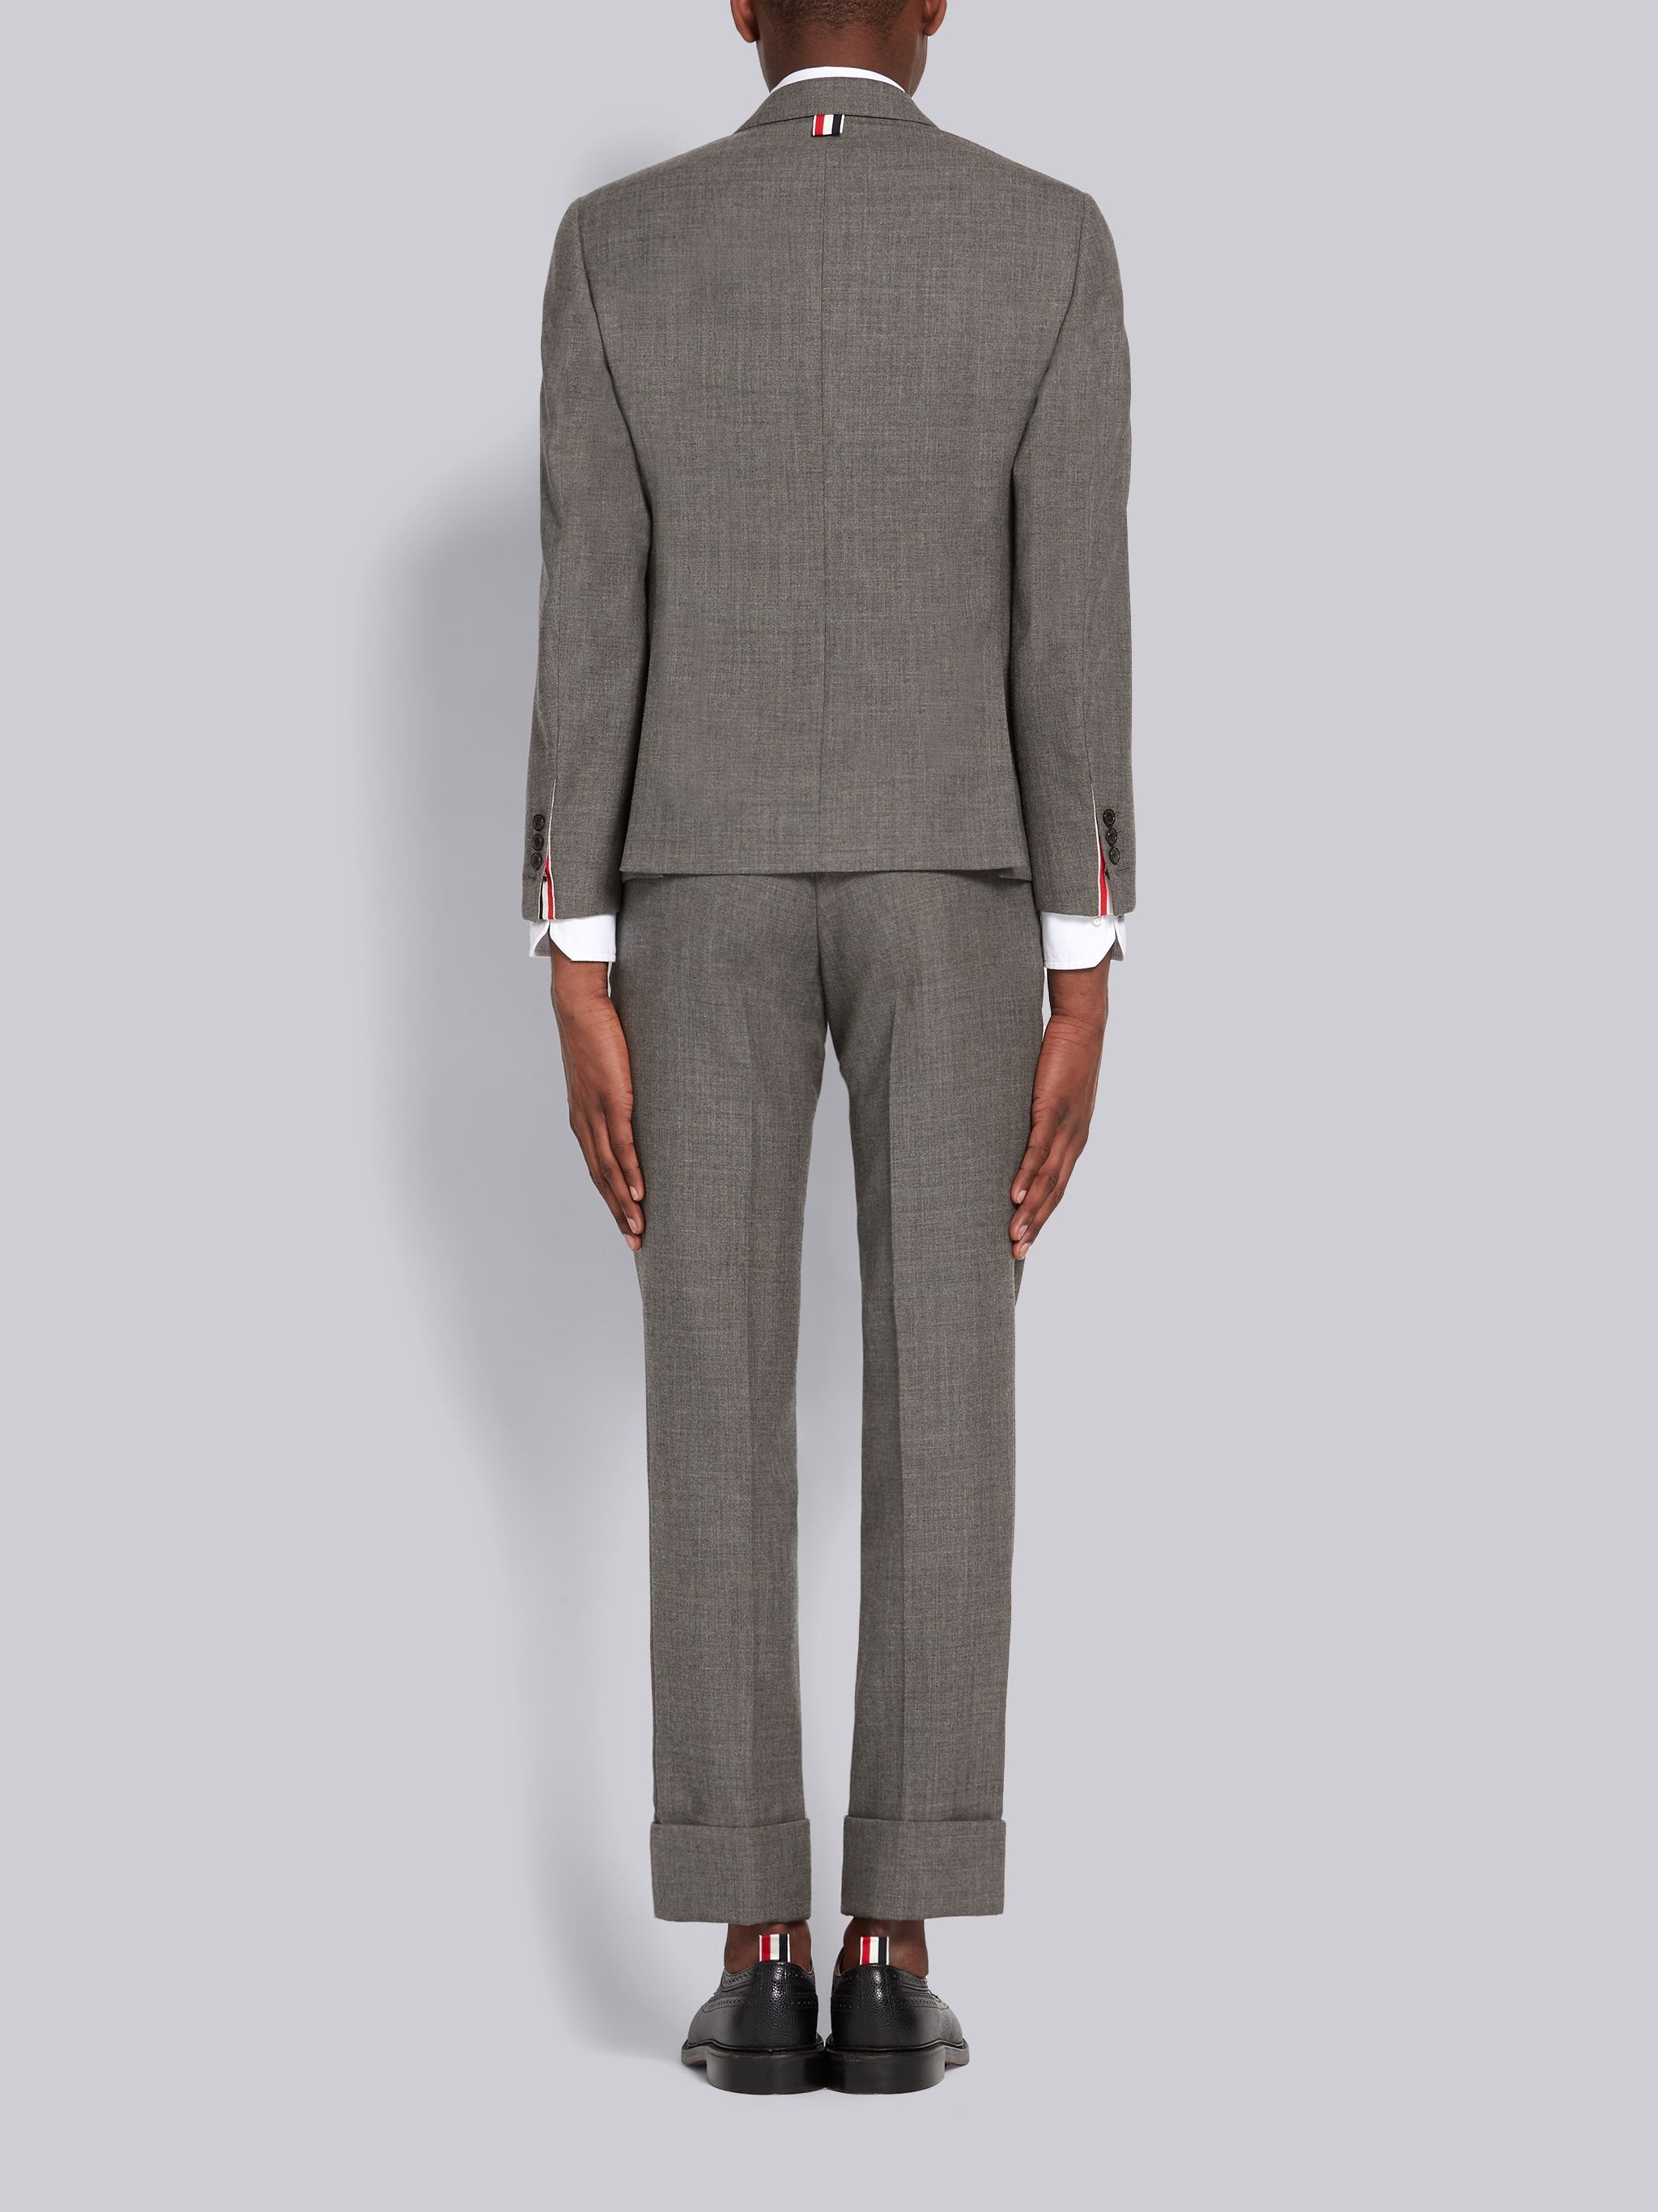 Thom Browne Seersucker Suit With Tie - Grey